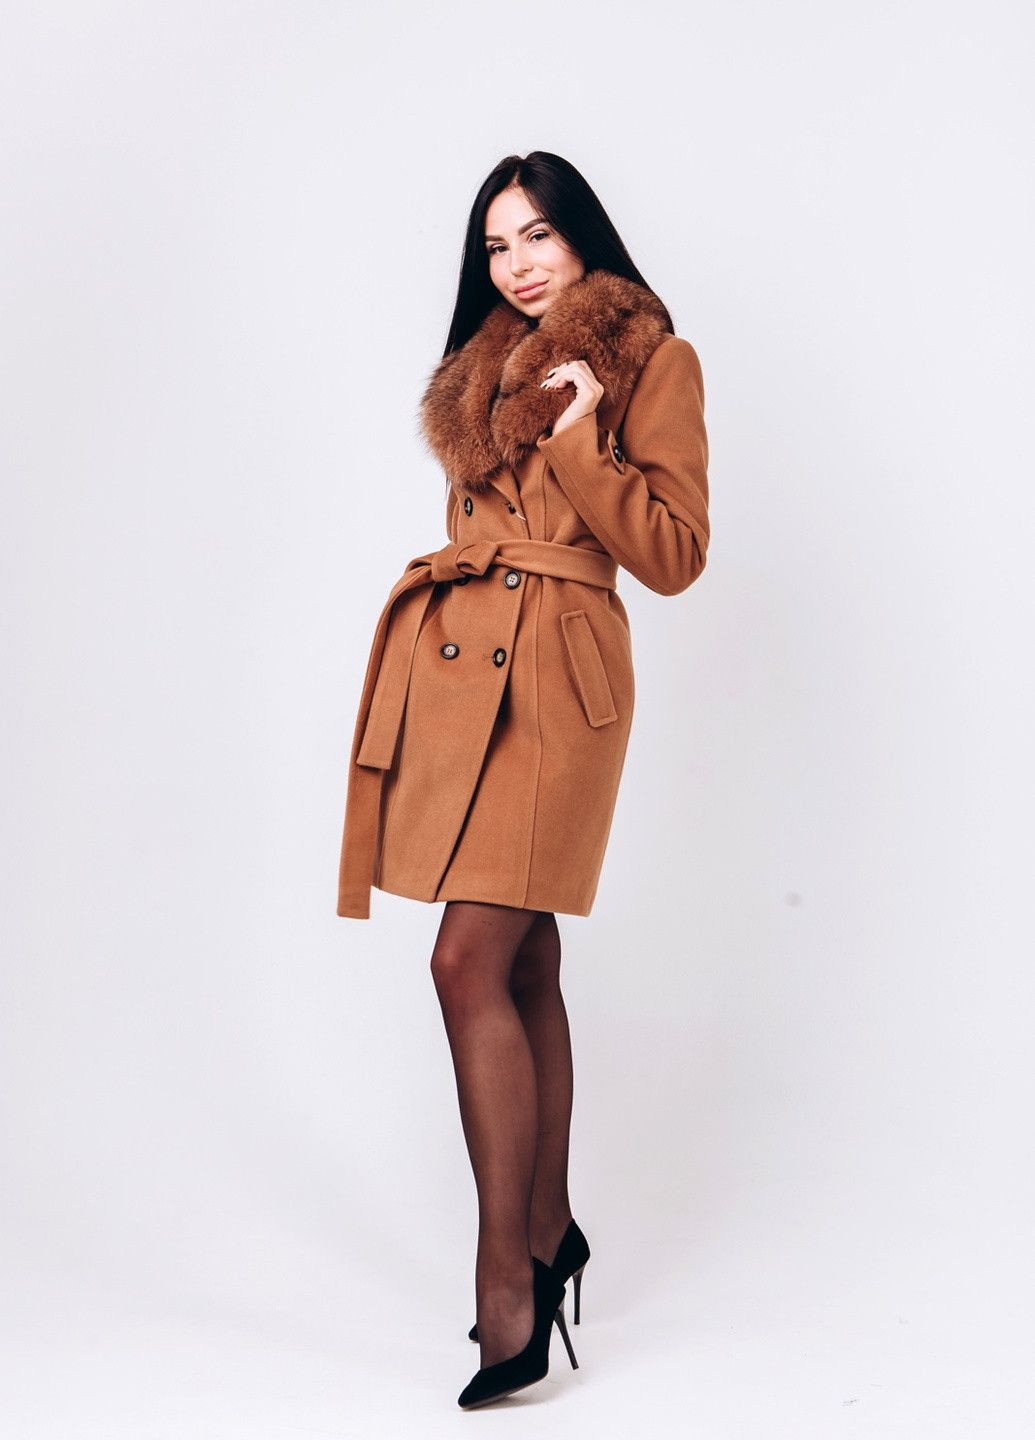 Світло-коричневе зимнє Пальто двобортне Chicly Furs